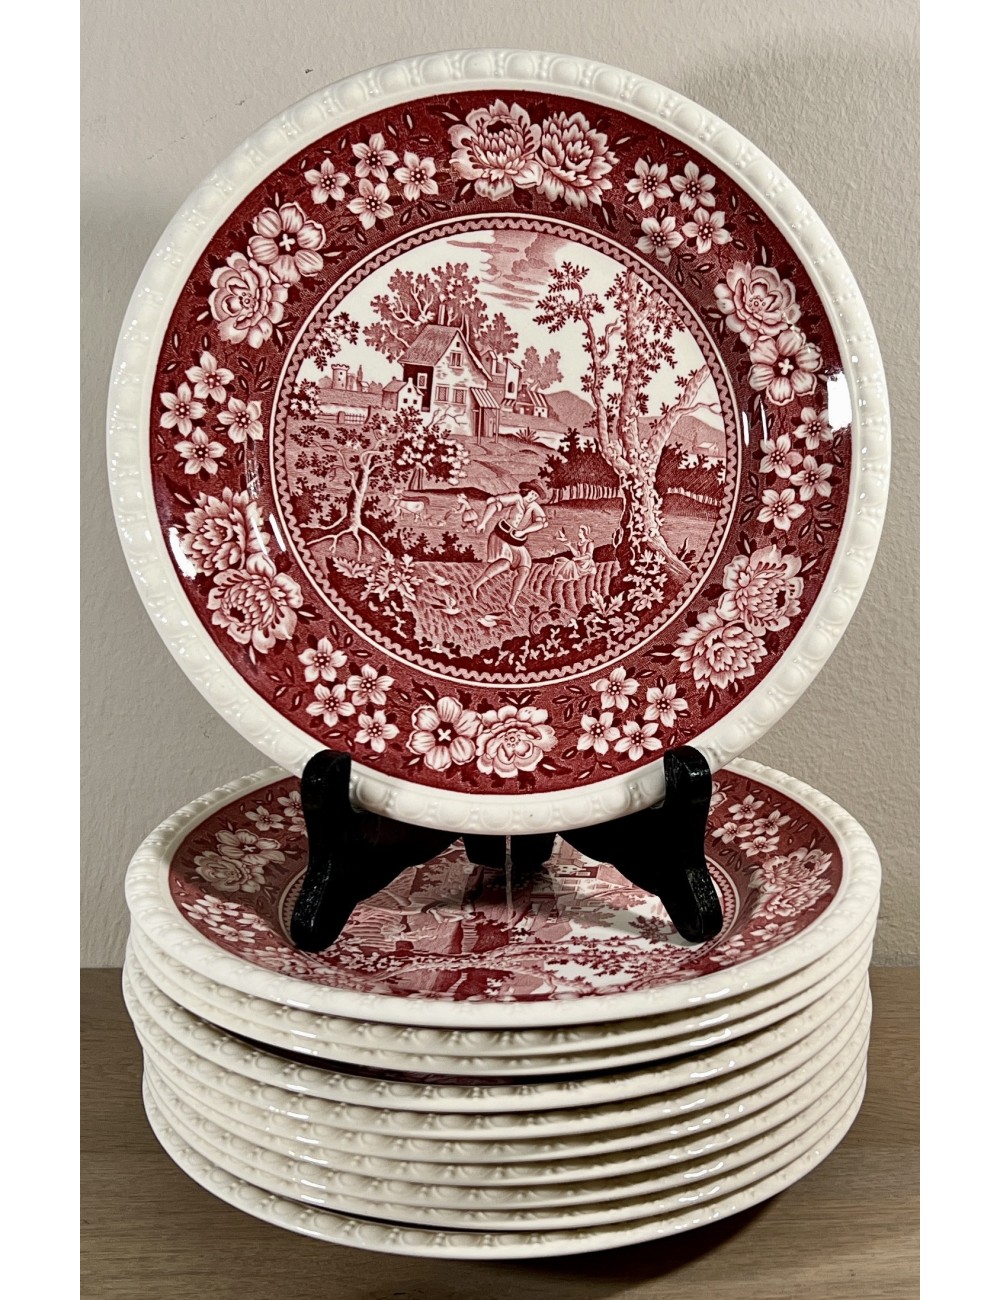 Ontbijtbord / Dessertbord - Villeroy & Boch - décor RUSTICANA rood